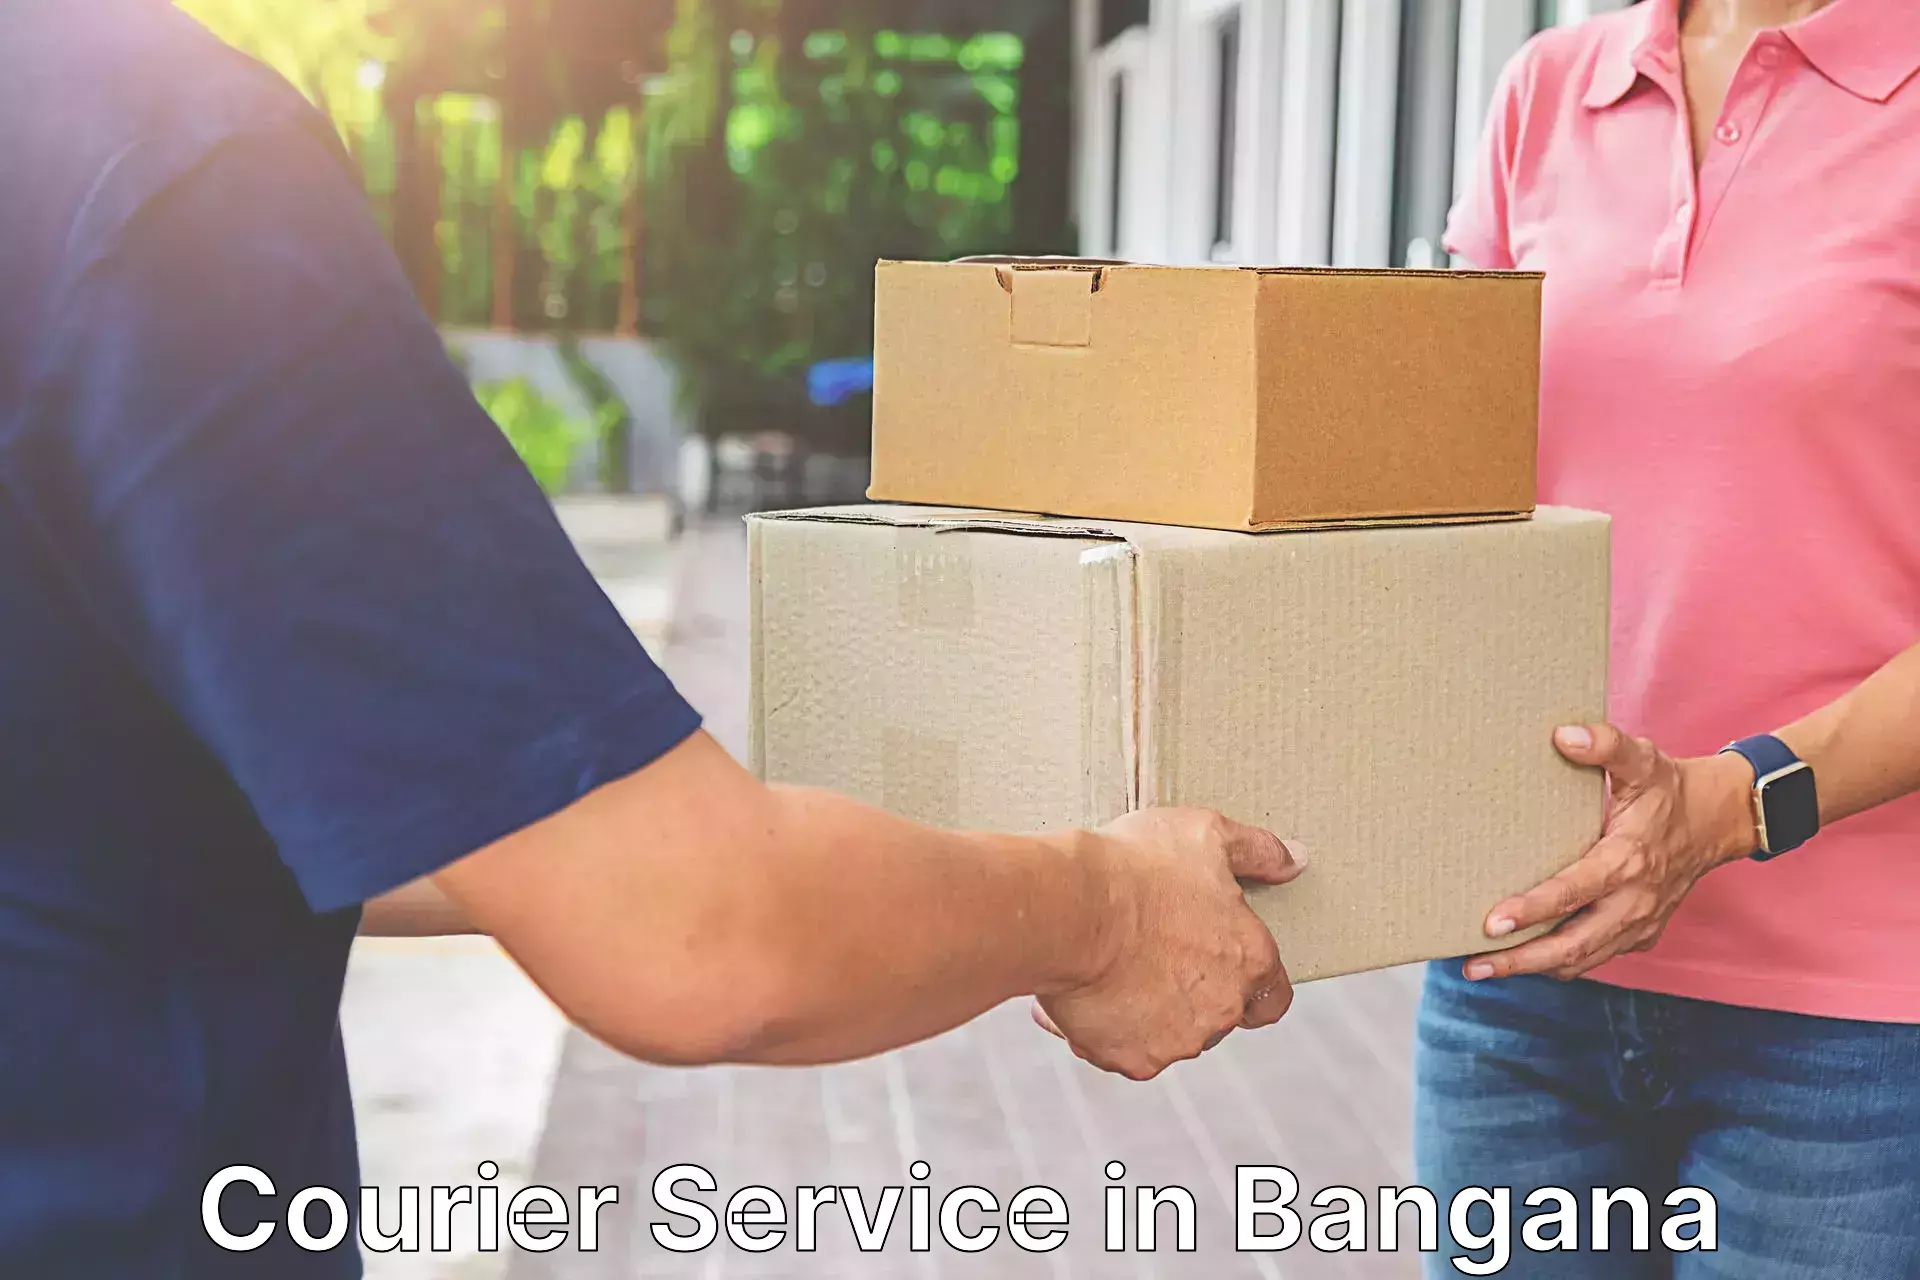 Efficient shipping operations in Bangana